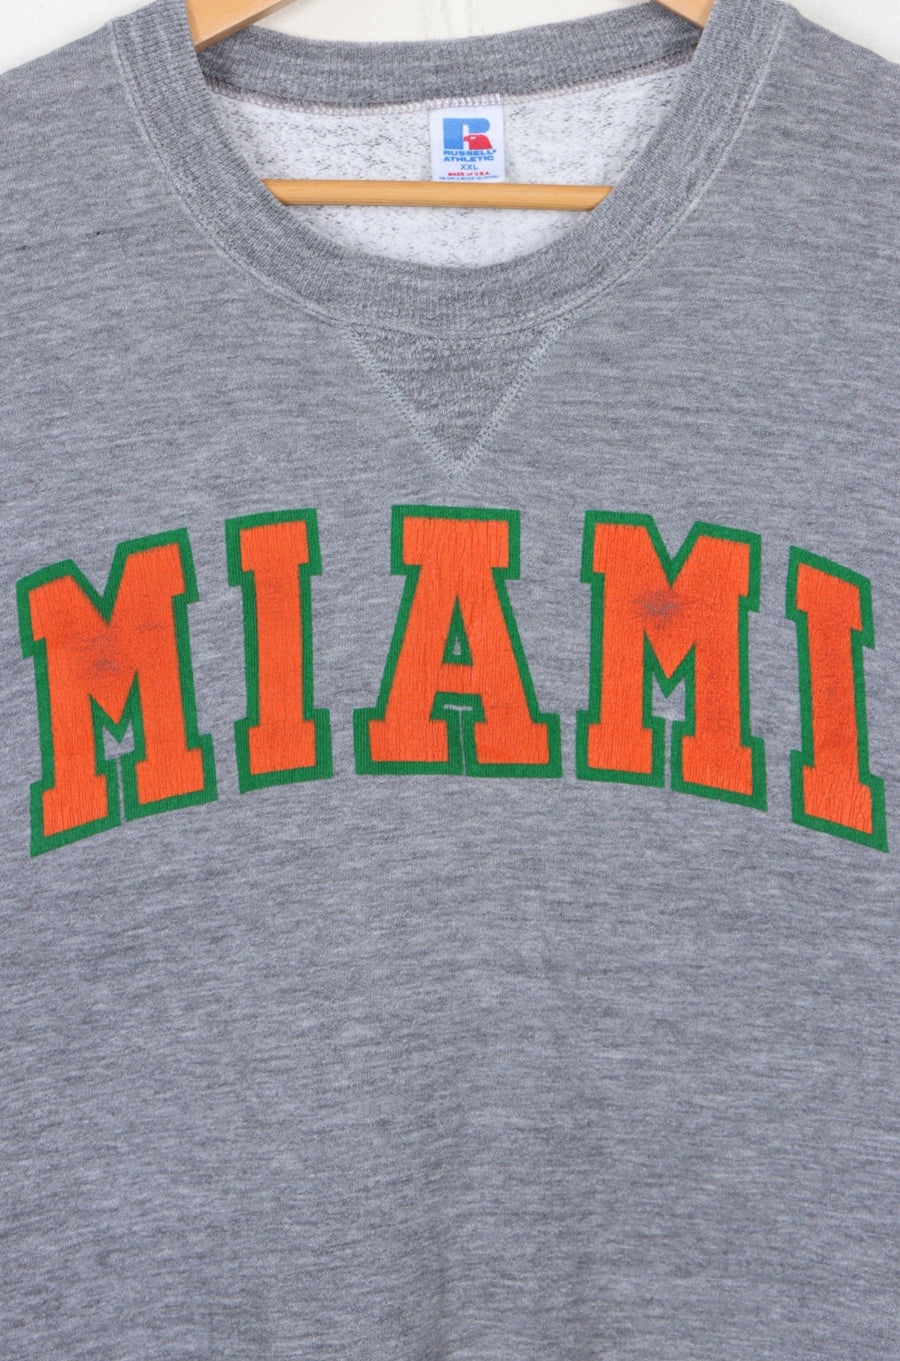 Miami Hurricanes RUSSELL ATHLETIC Varsity Sweatshirt USA Made (XL)